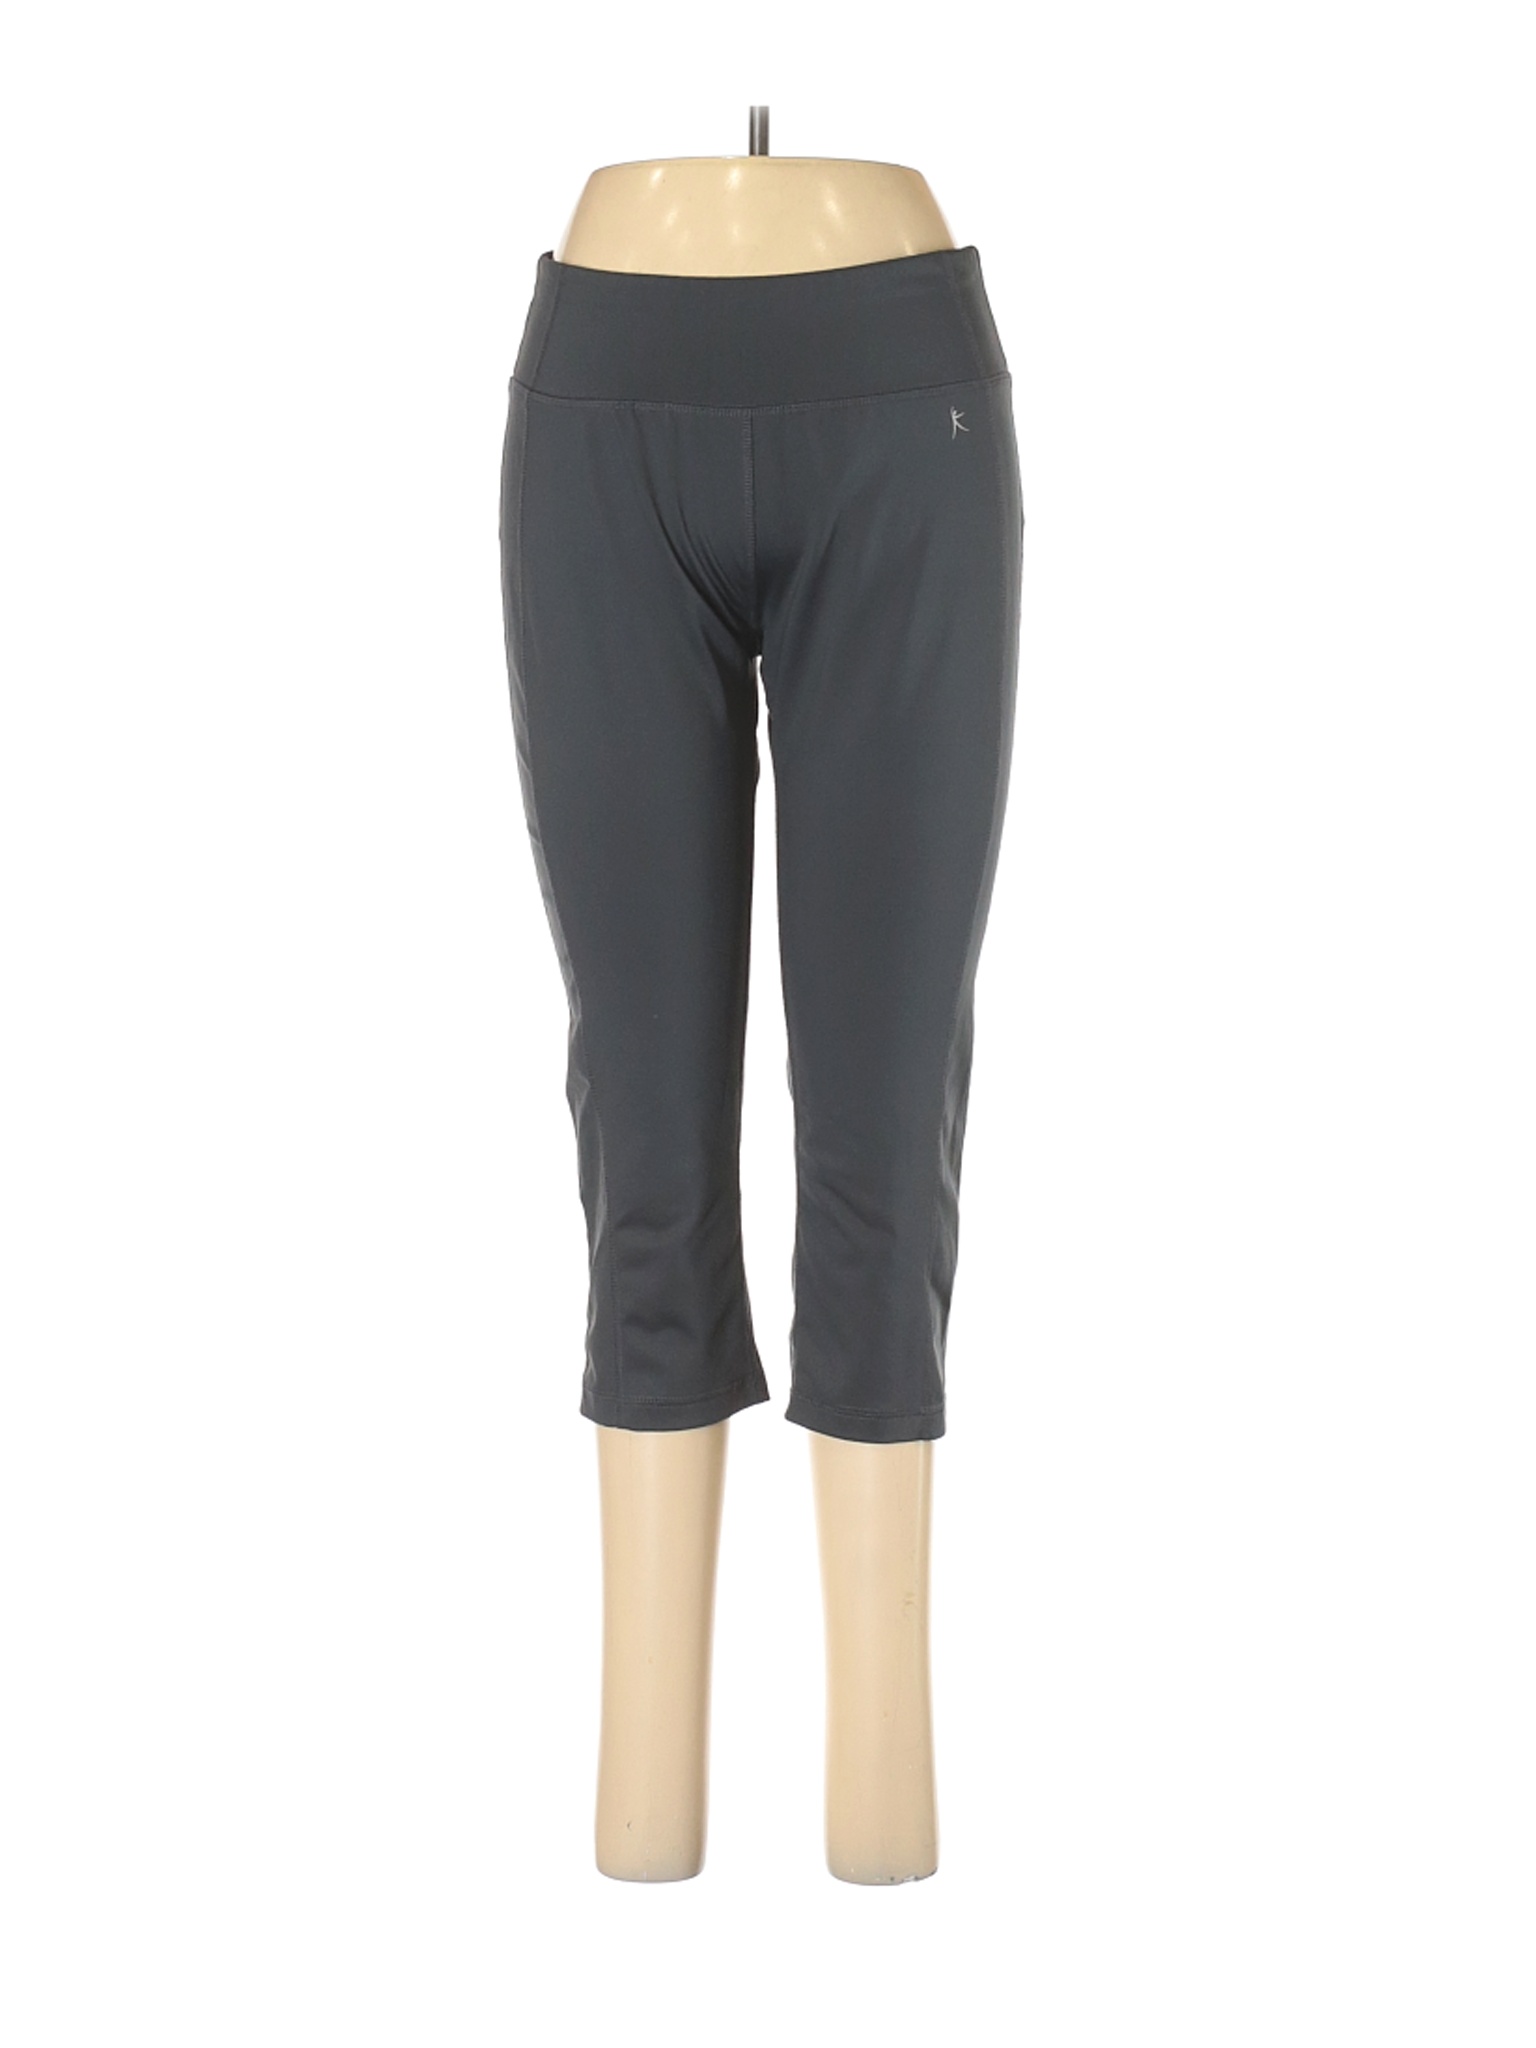 Danskin Women Gray Active Pants 8 | eBay